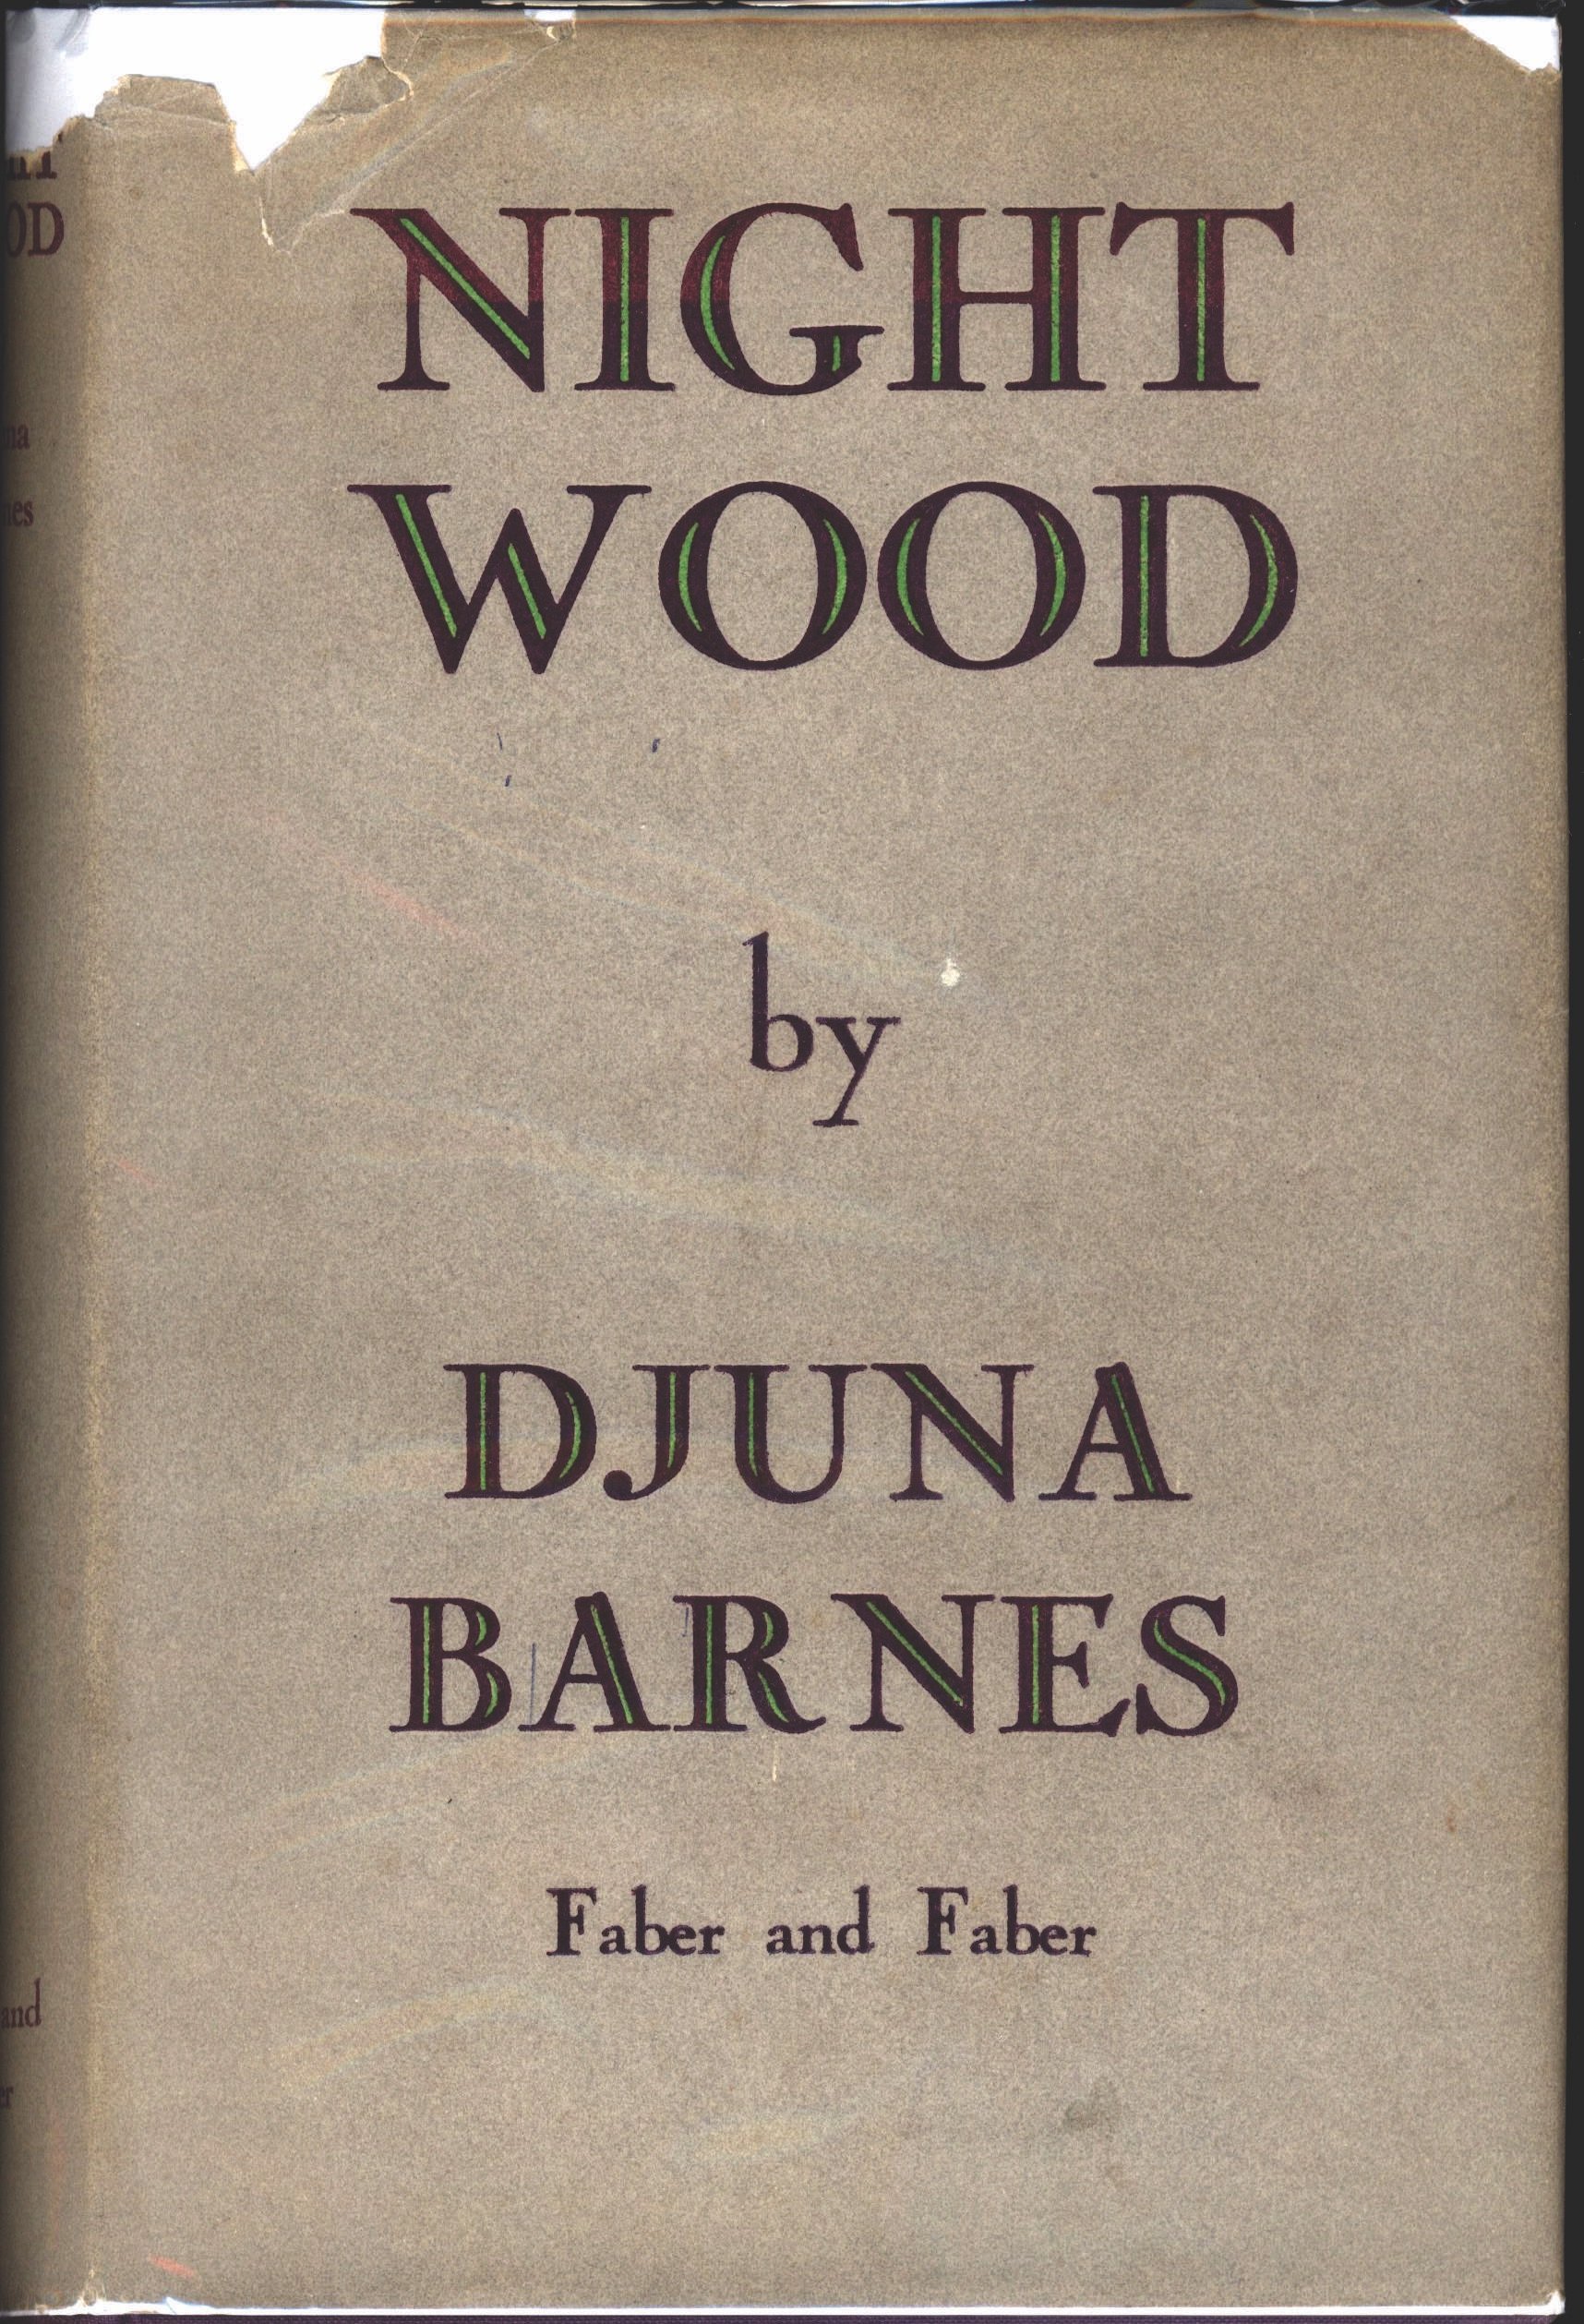 Djuna Barnes, Nightwood, 1936